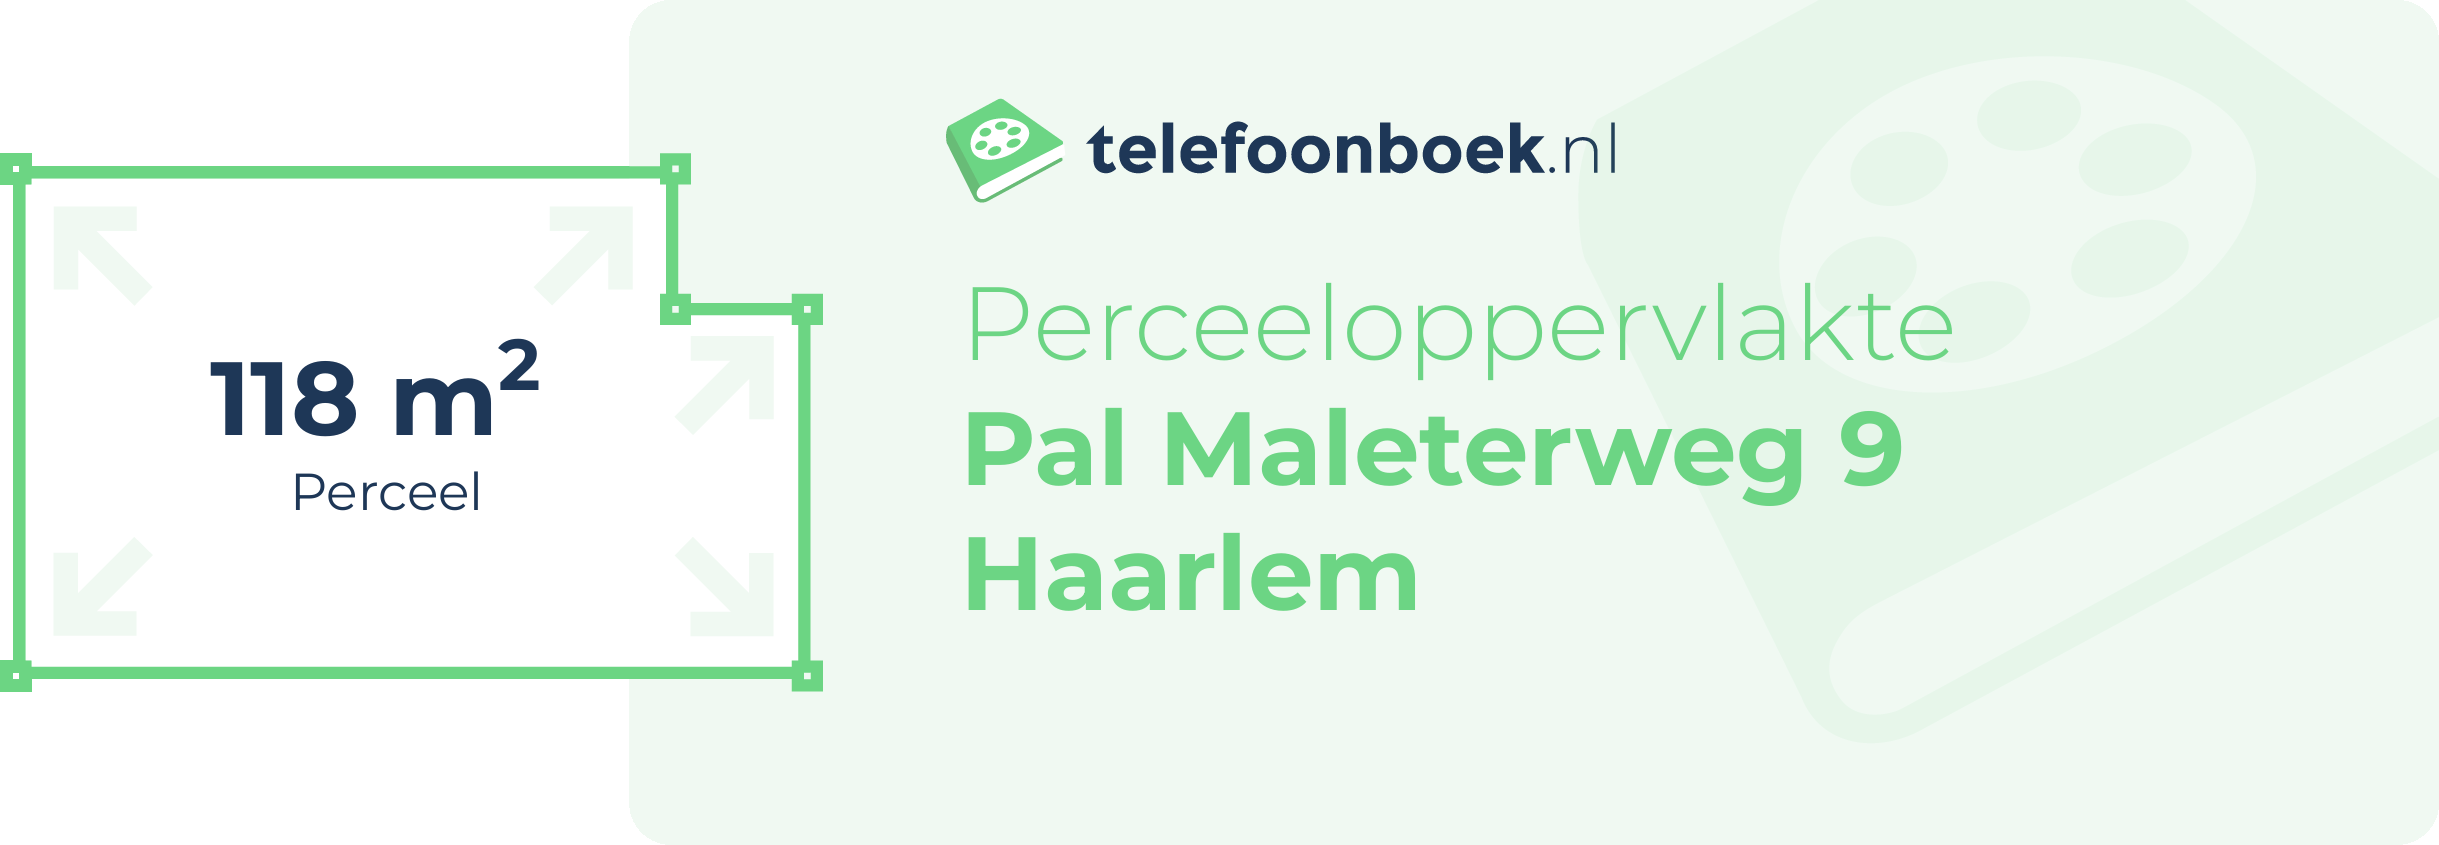 Perceeloppervlakte Pal Maleterweg 9 Haarlem